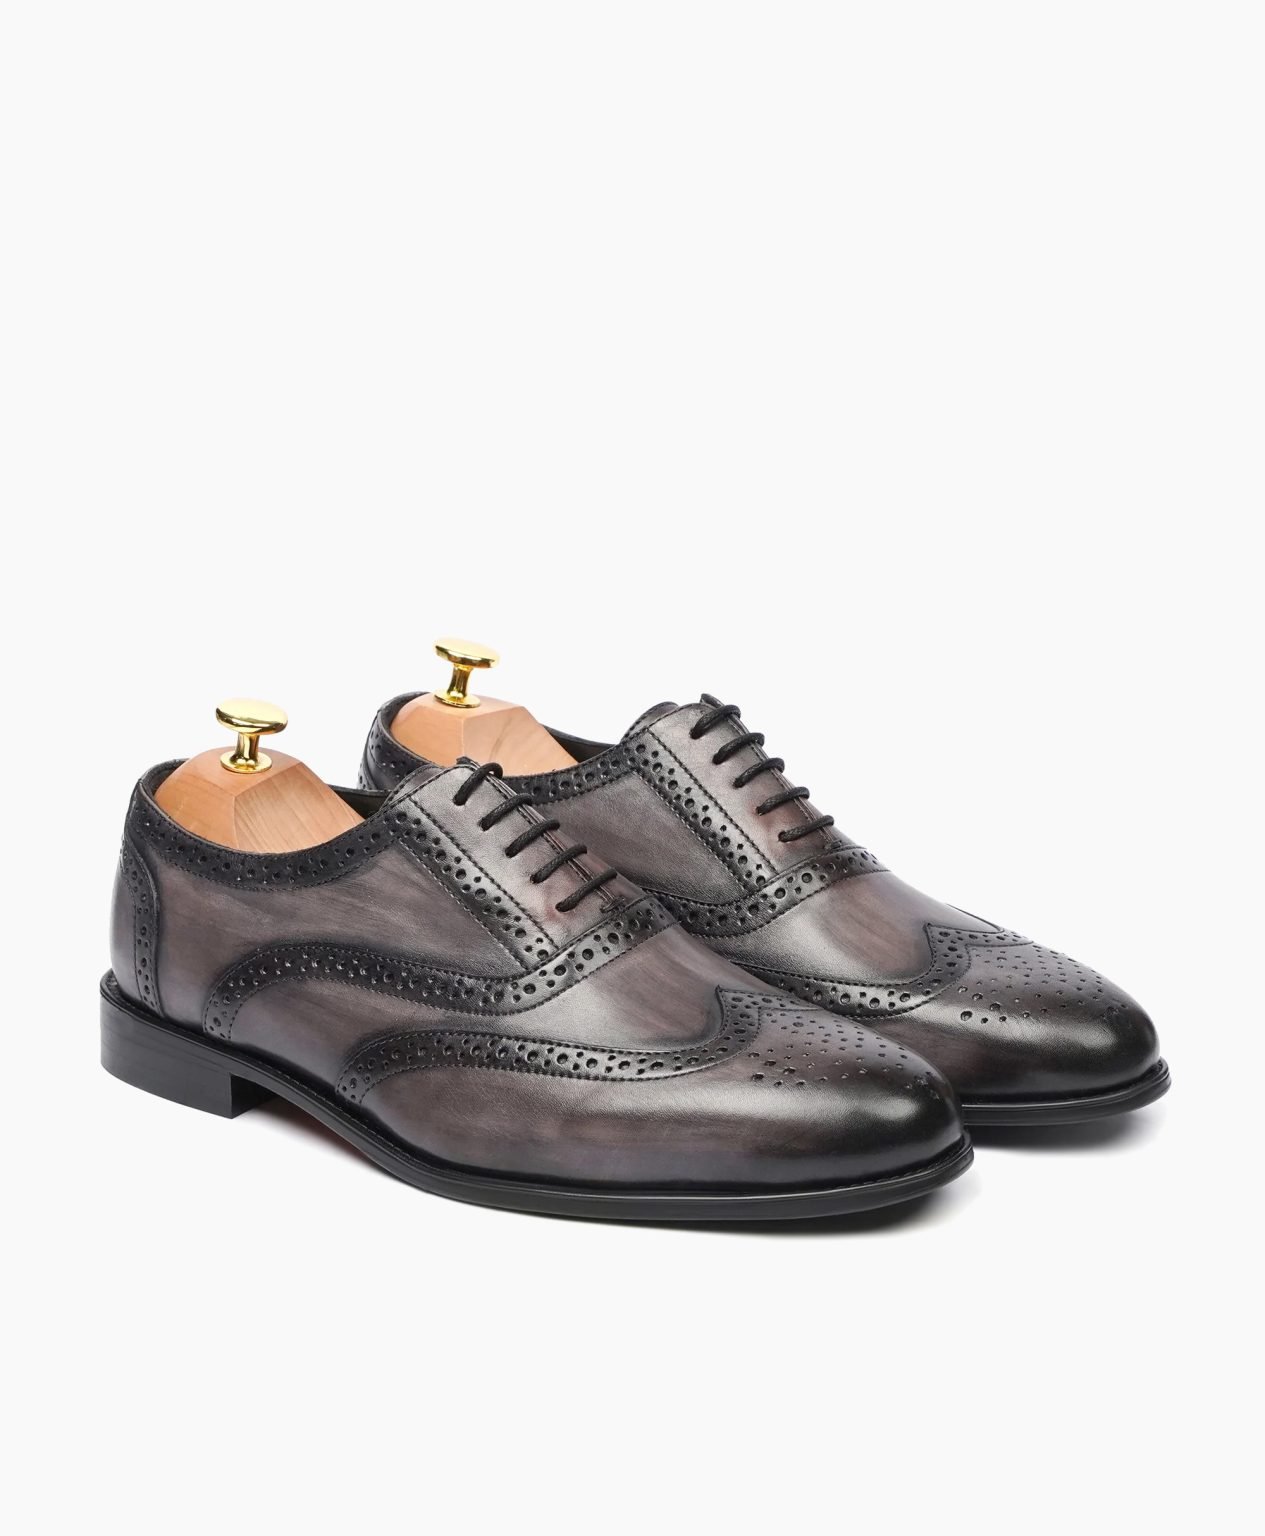 aylesbury-oxford-burnish-gray-leather-shoes-image200